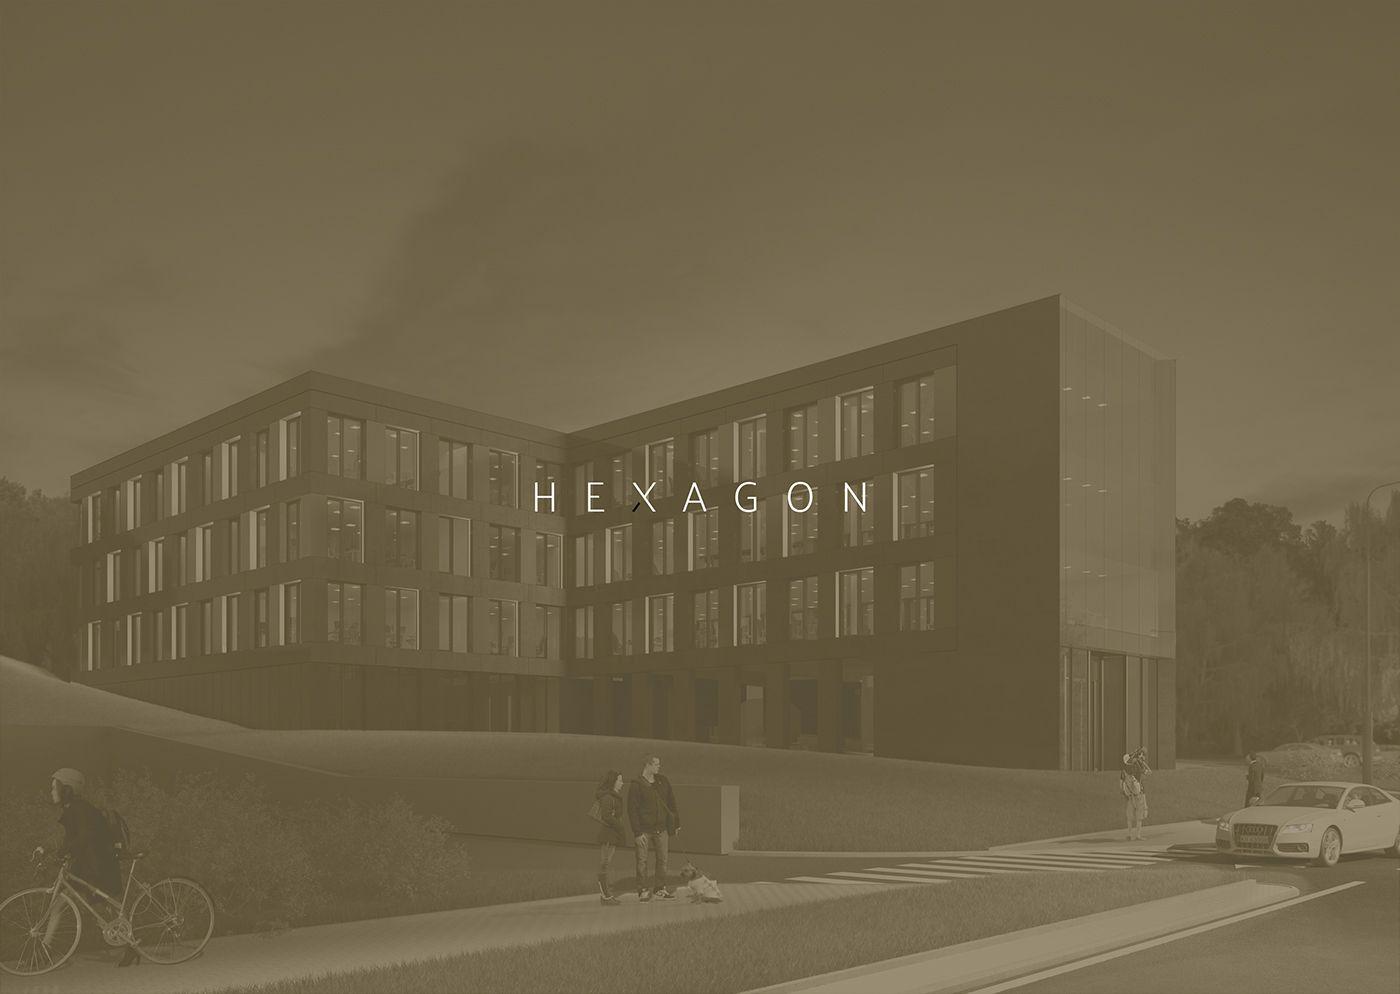 Hexagon Corporate Logo - Hexagon Corporate Identity on Behance